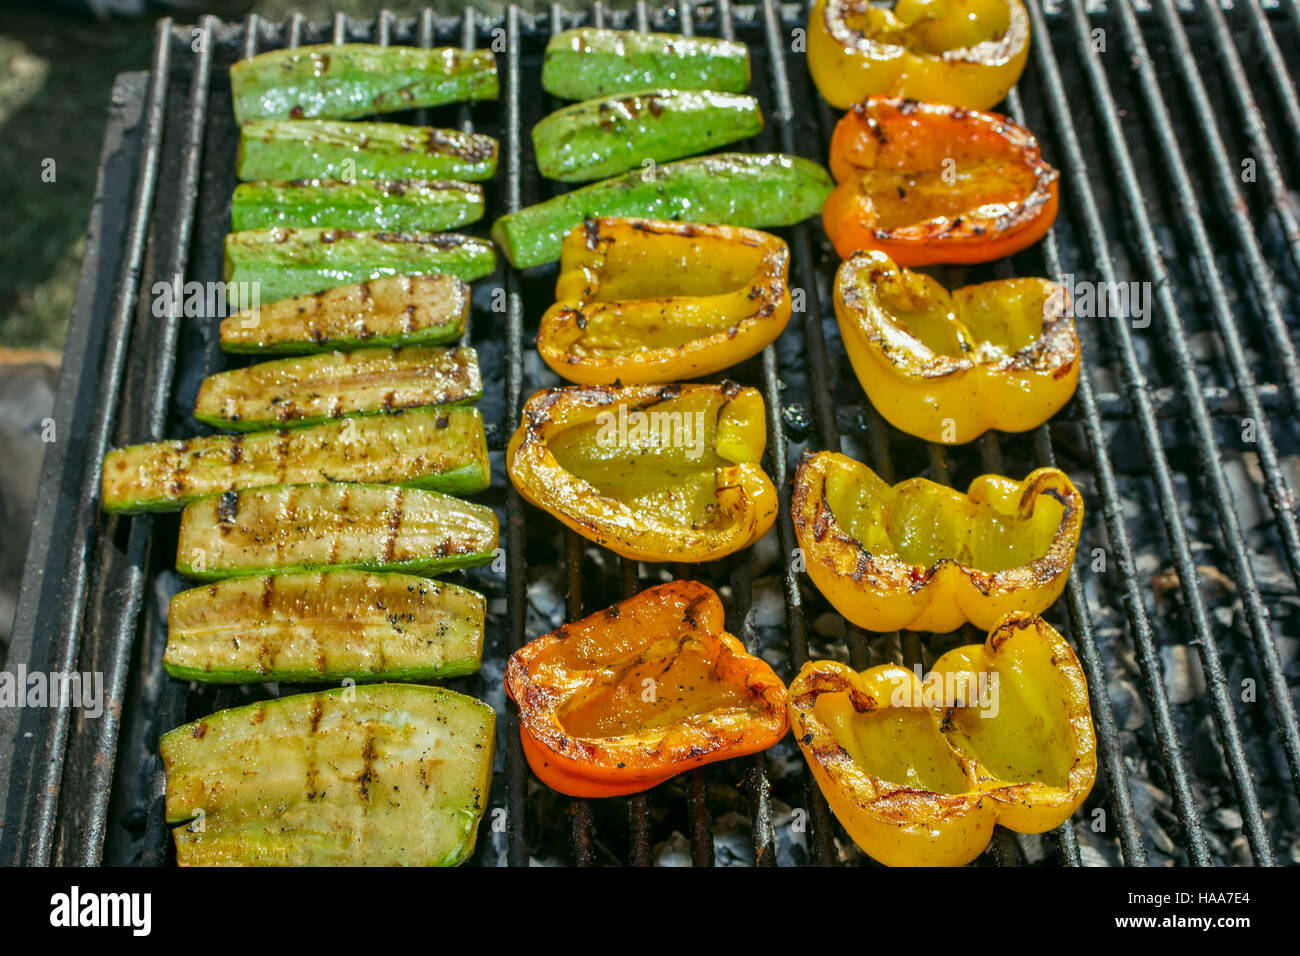 Holzkohle-Grill mit Gemüse Paprika, Zucchini und Gurke Stockfotografie -  Alamy